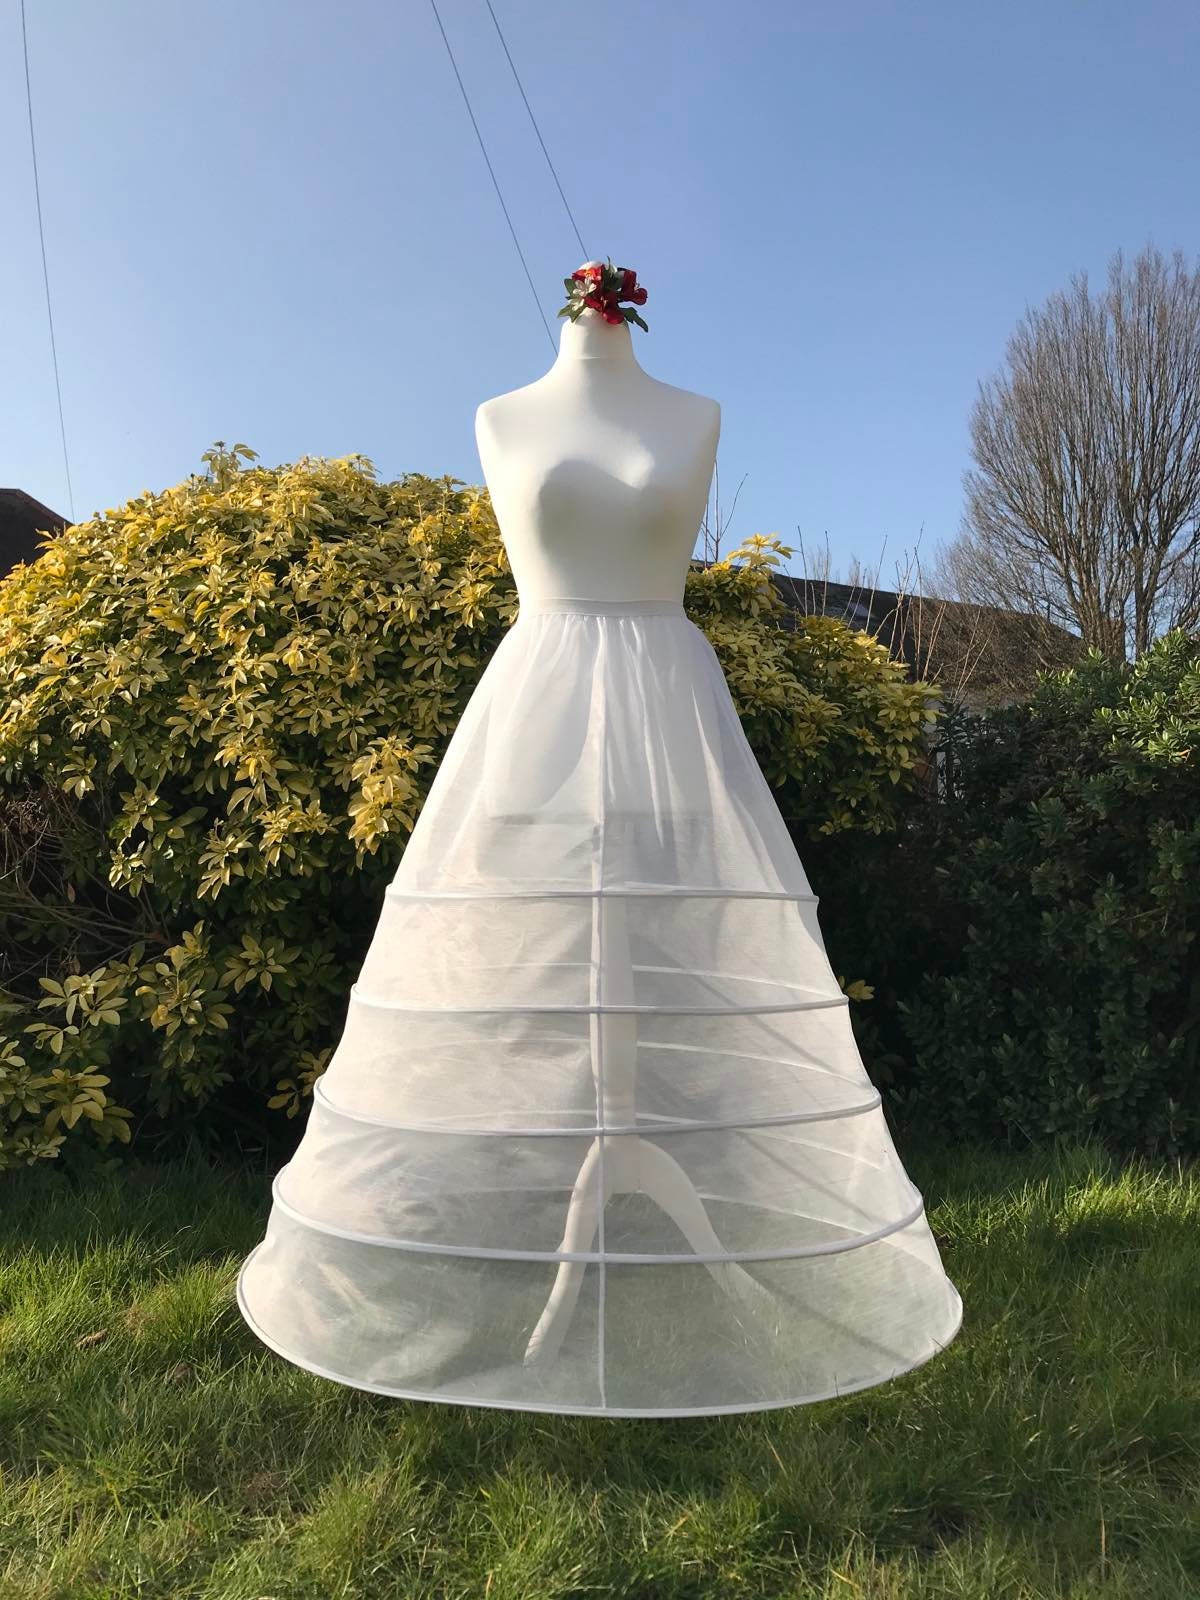 Hoop Brand New Wedding/Prom Ivory A Line Style 1 x Hoop /Single Hoop Underskirt Petticoat ~ UK 8-30 S - 6XL Weddings Clothing Dresses Bridal Gowns & Separates 